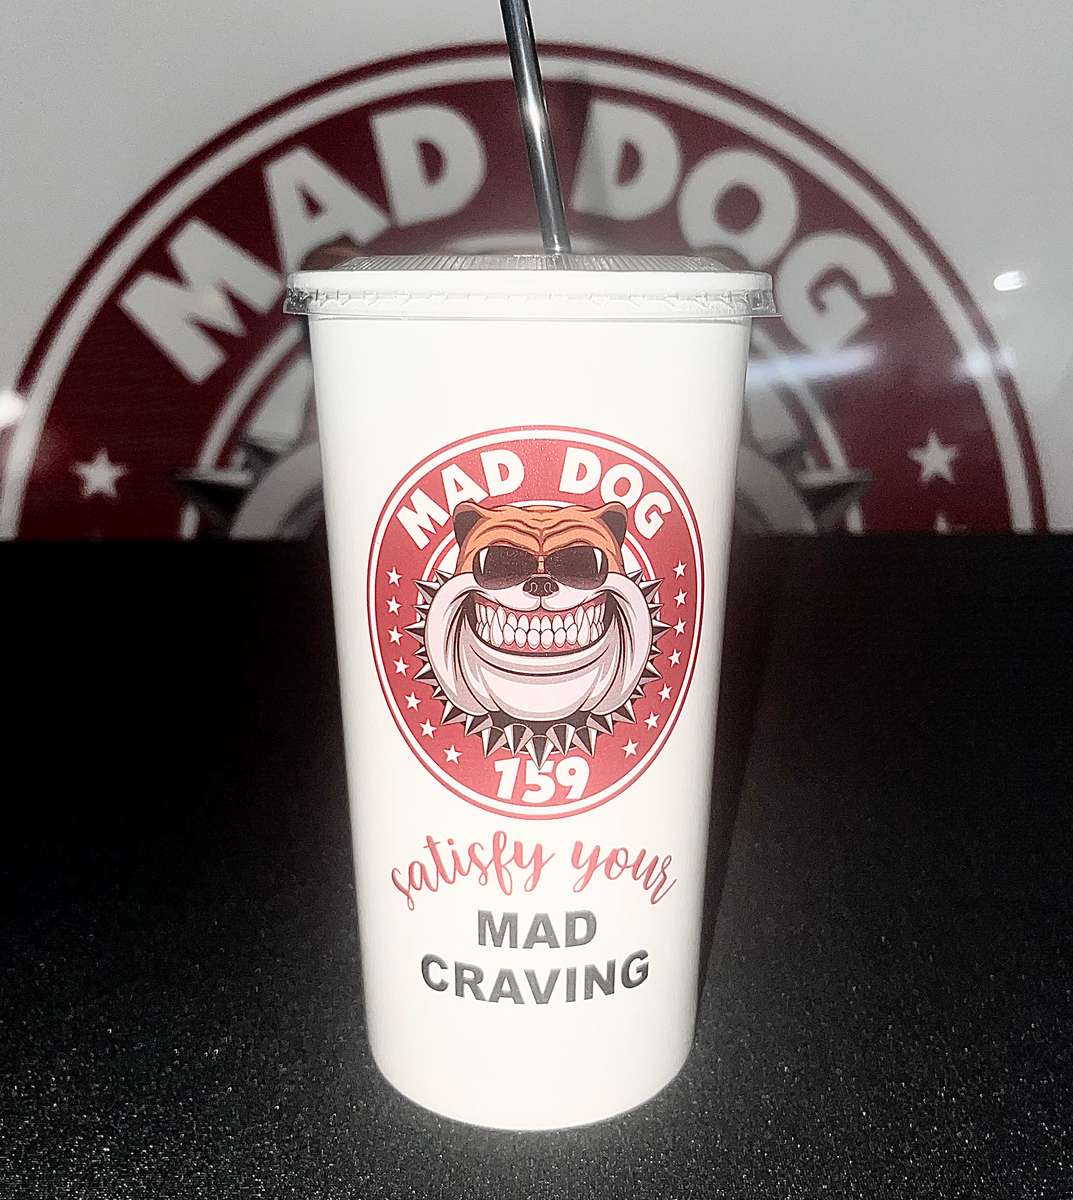 Mug Root Beer - Drinks - Mad Dog 159